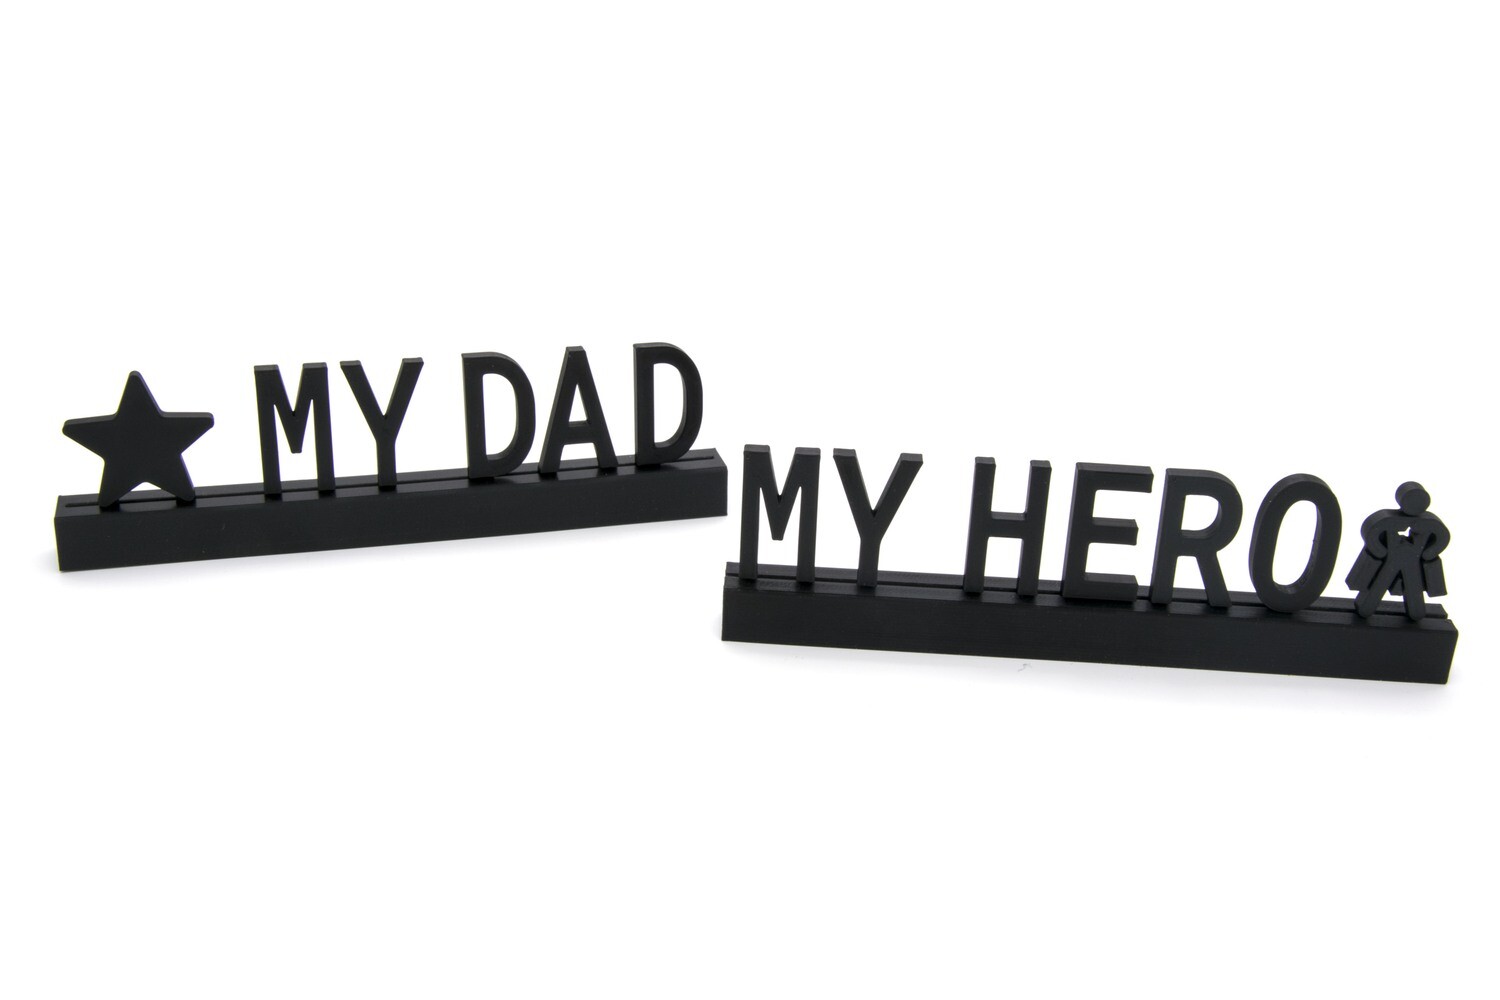 "My dad - My hero"